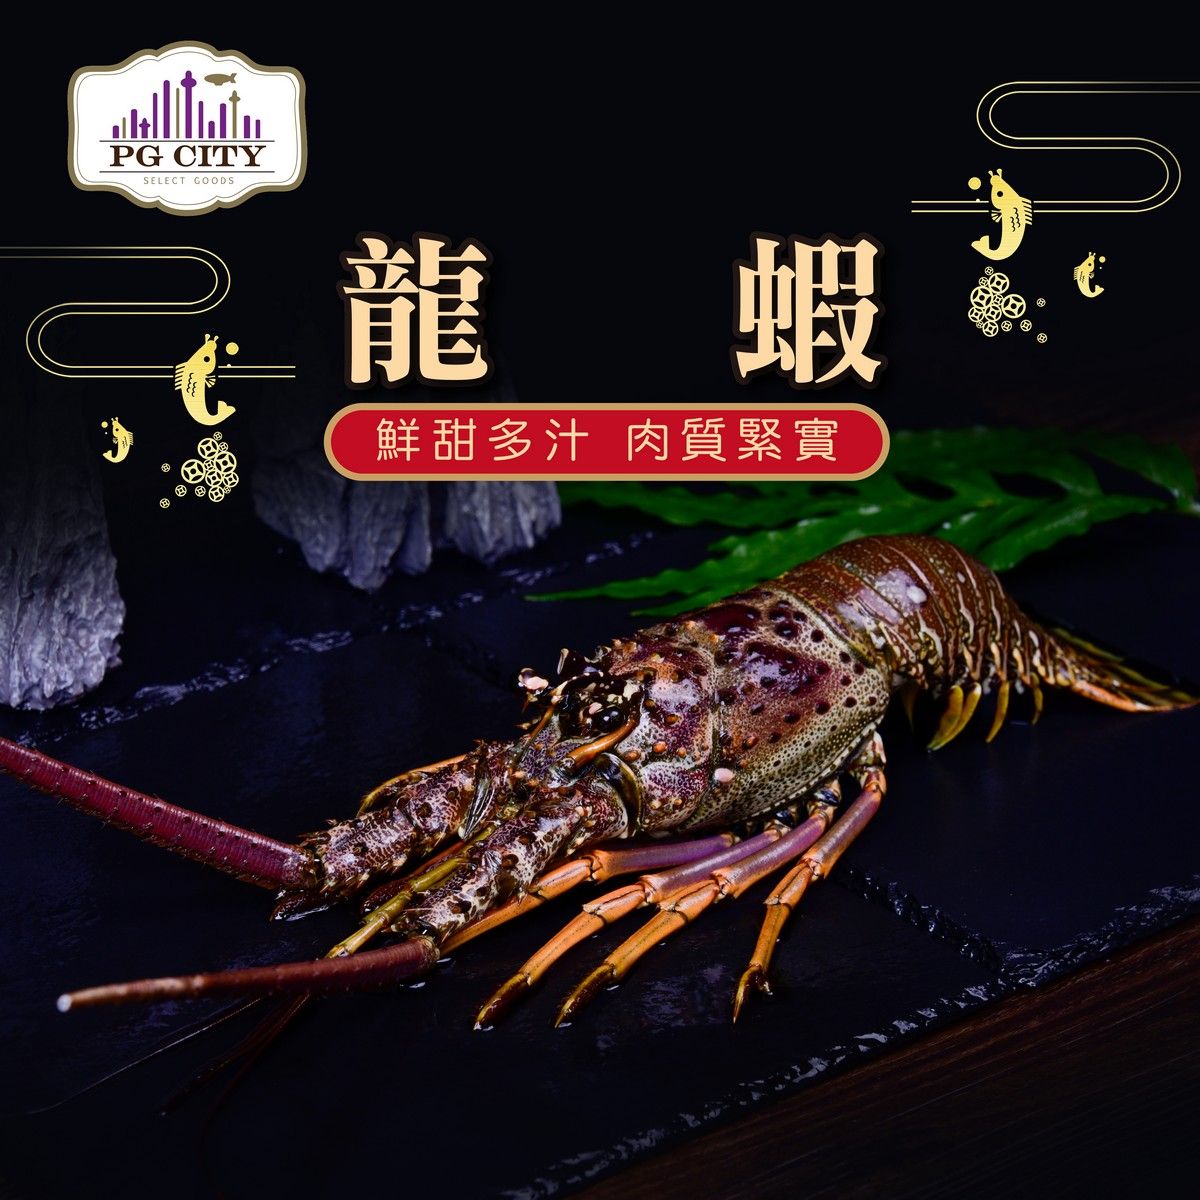 PG CITY 嚴選 巴西生凍大龍蝦 lobster （ 890g ±10%/2隻 ）一組